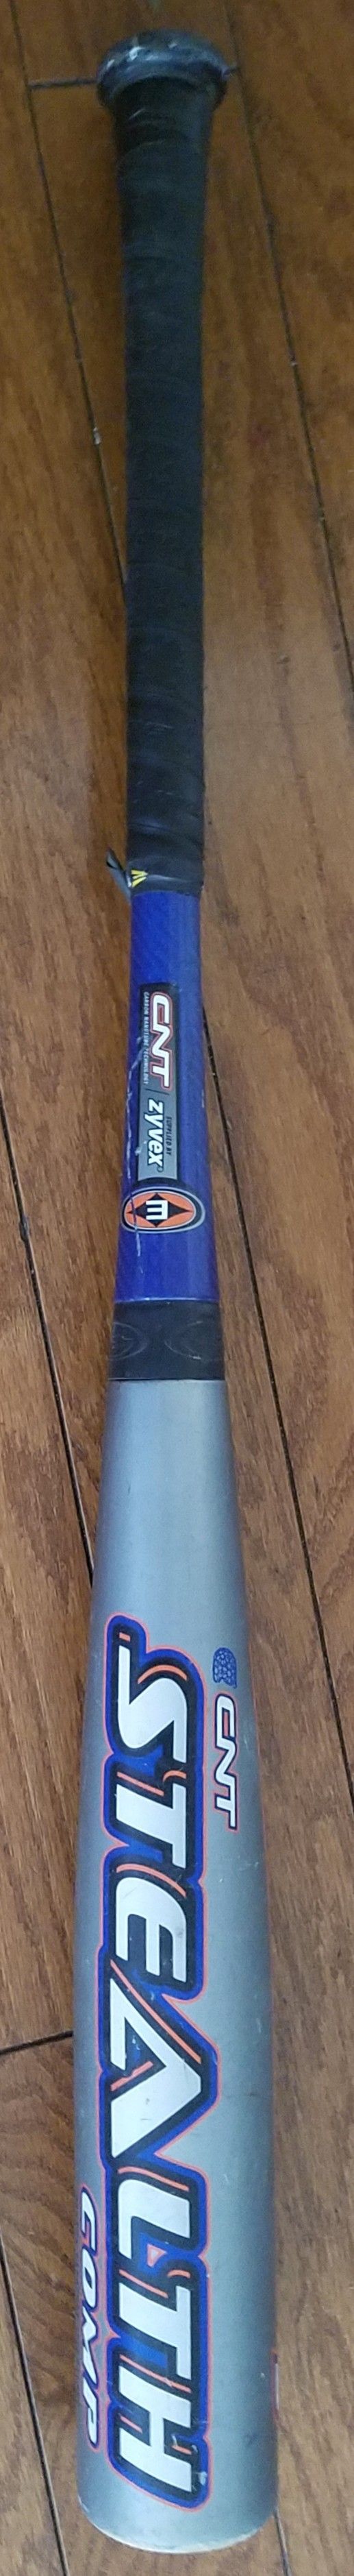 Easton Stealth baseball bat besr -3